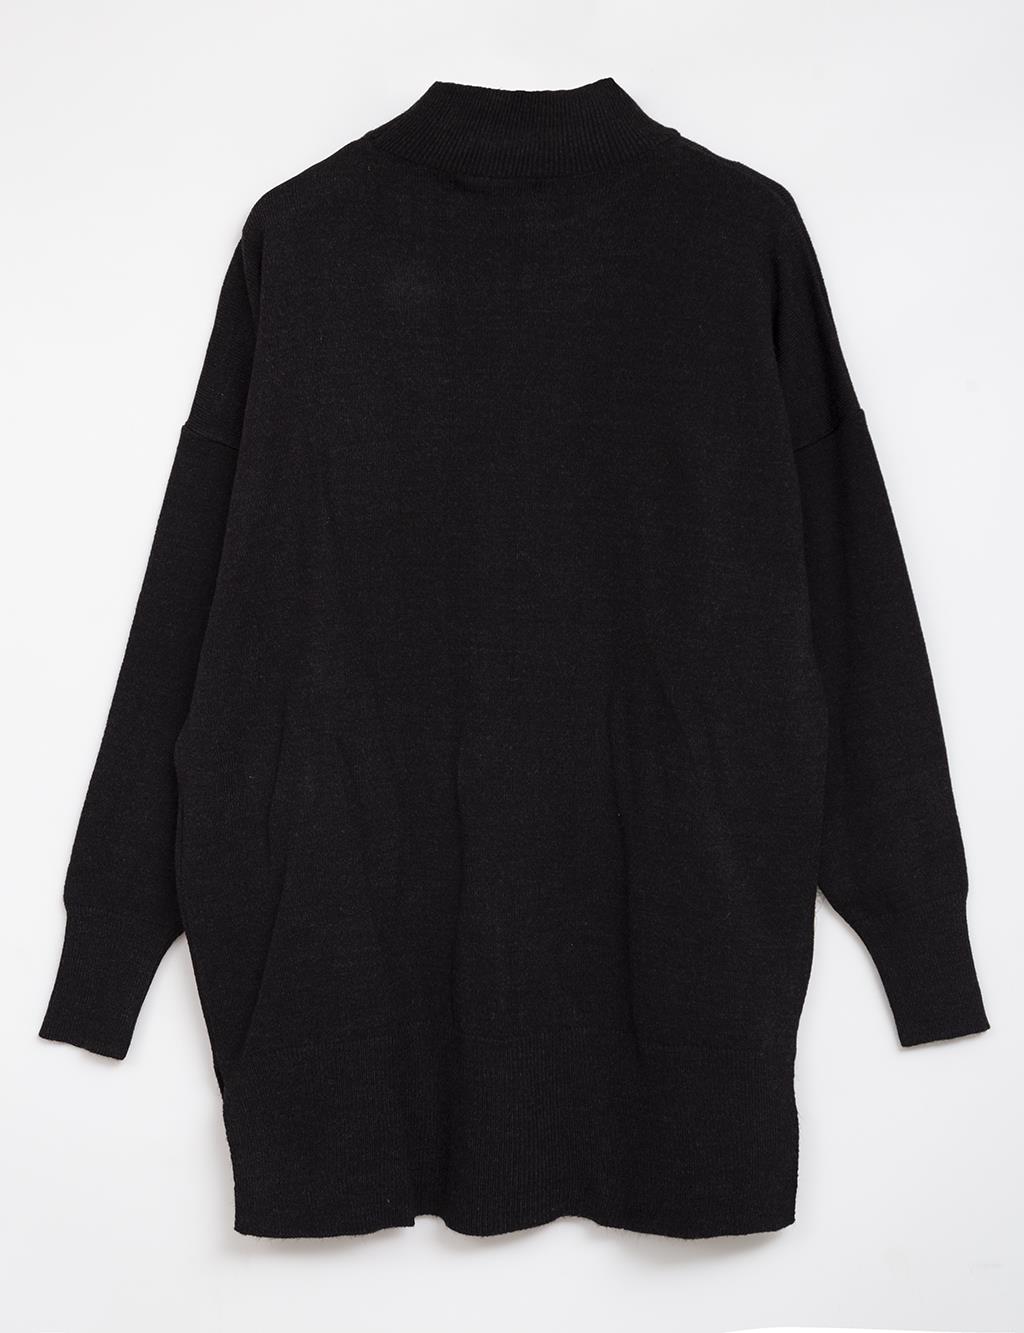 Half Turtleneck Knitwear Tunic Black